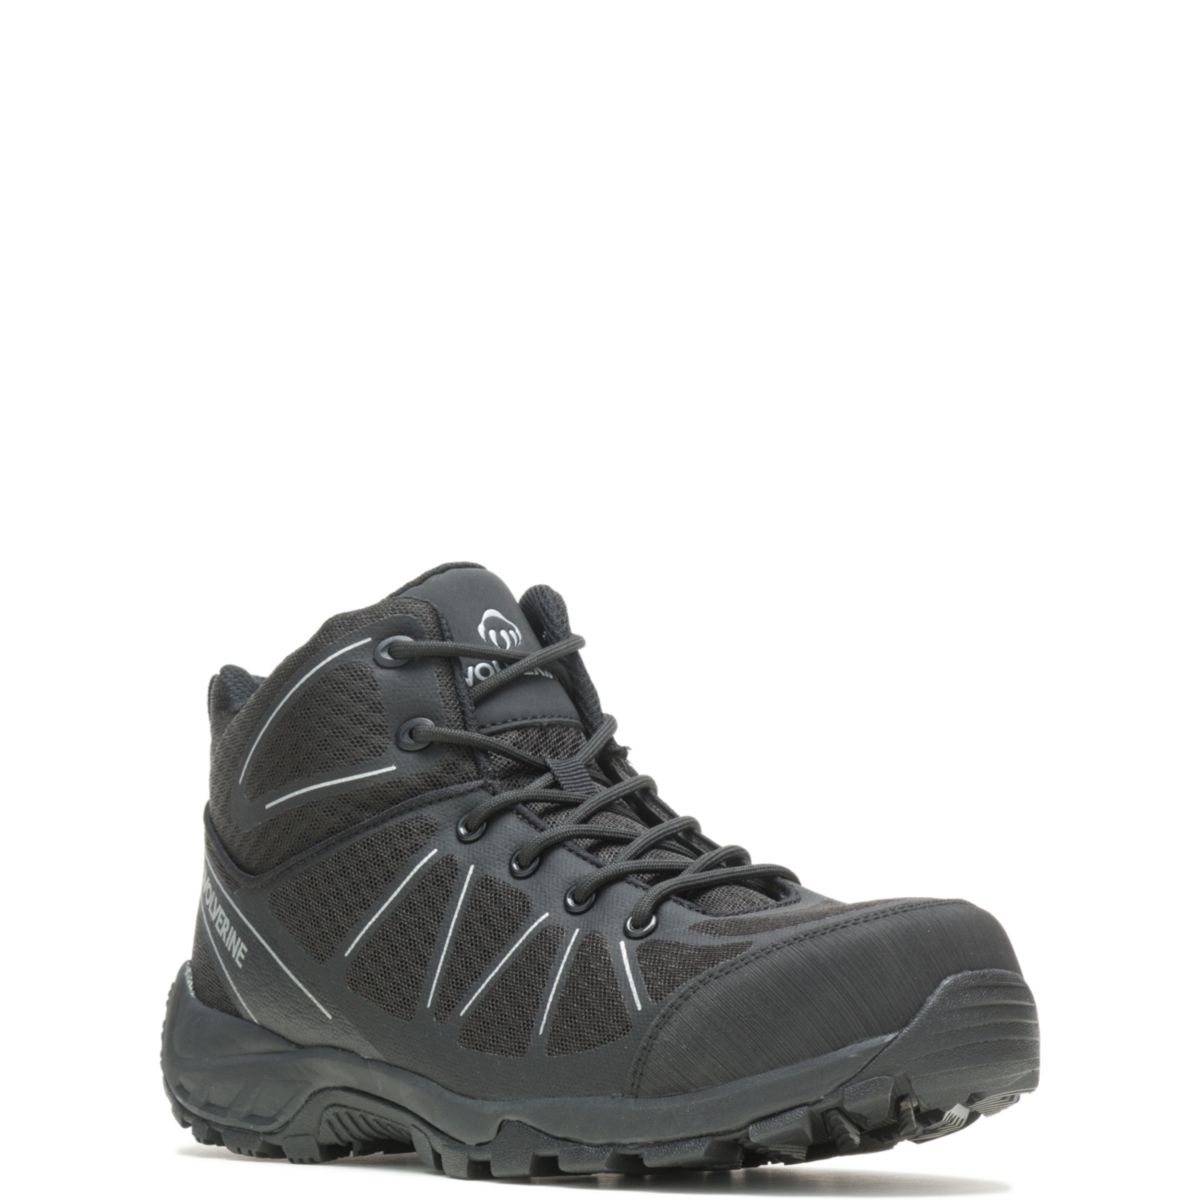 WOLVERINE Men's Amherst Ii CarbonMAXÂ® Composite Toe Work Boot Black - W201150 Varies BLACK - BLACK, 8.5